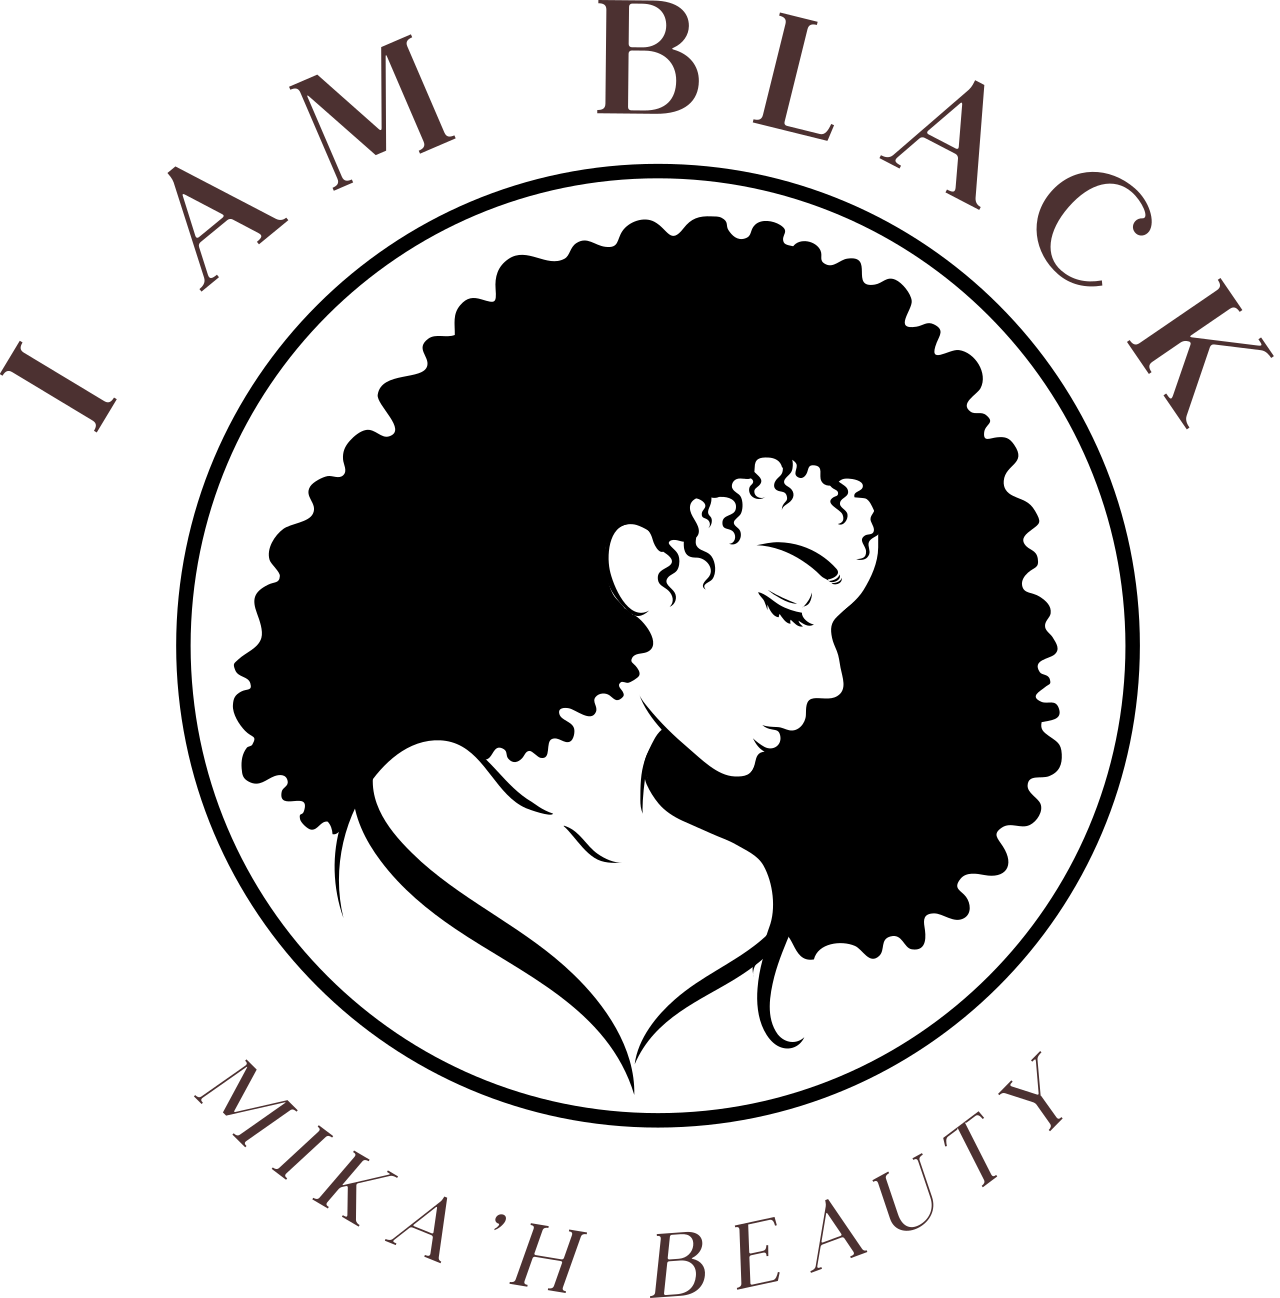 I AM BLACK's logo